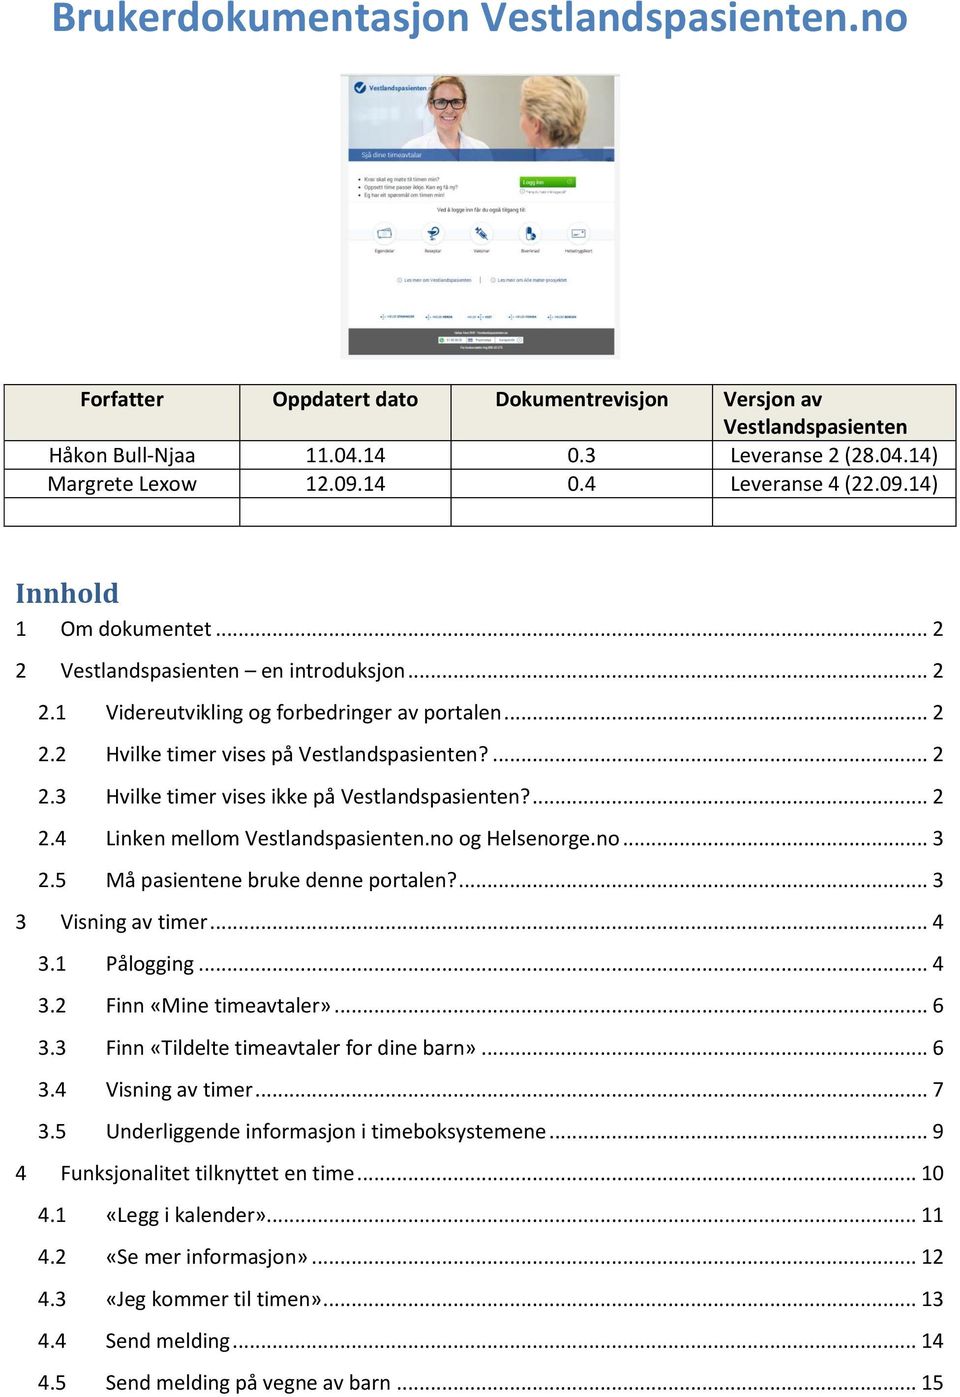 Brukerdokumentasjon Vestlandspasienten.no - PDF Free Download